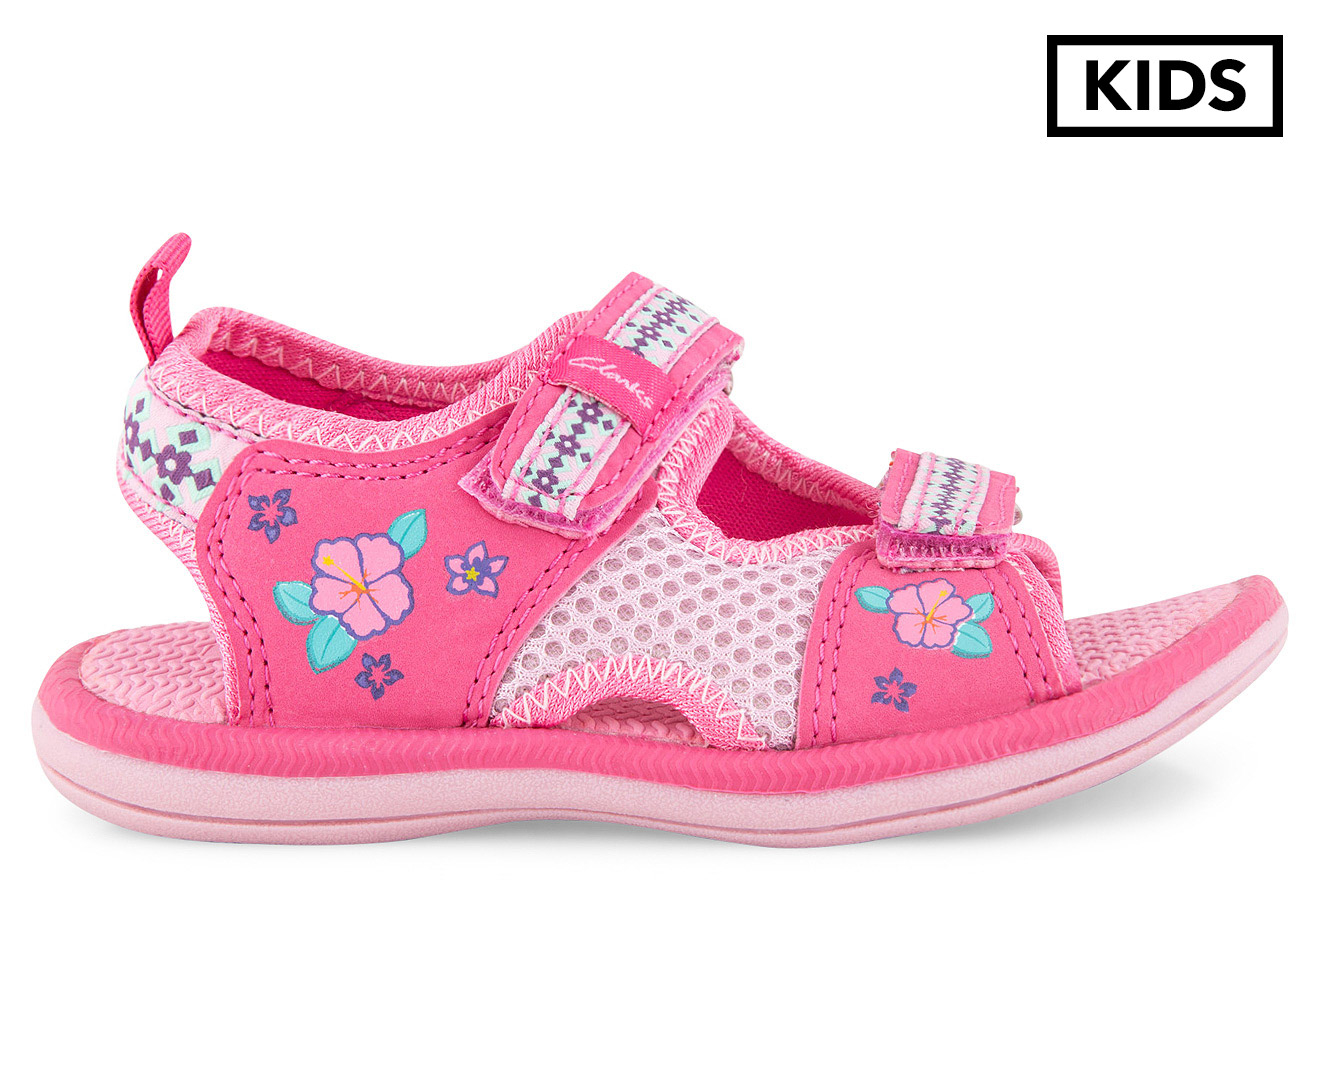 Clarks Kids' Feisty II Sandal - Pink/Multi | Catch.com.au